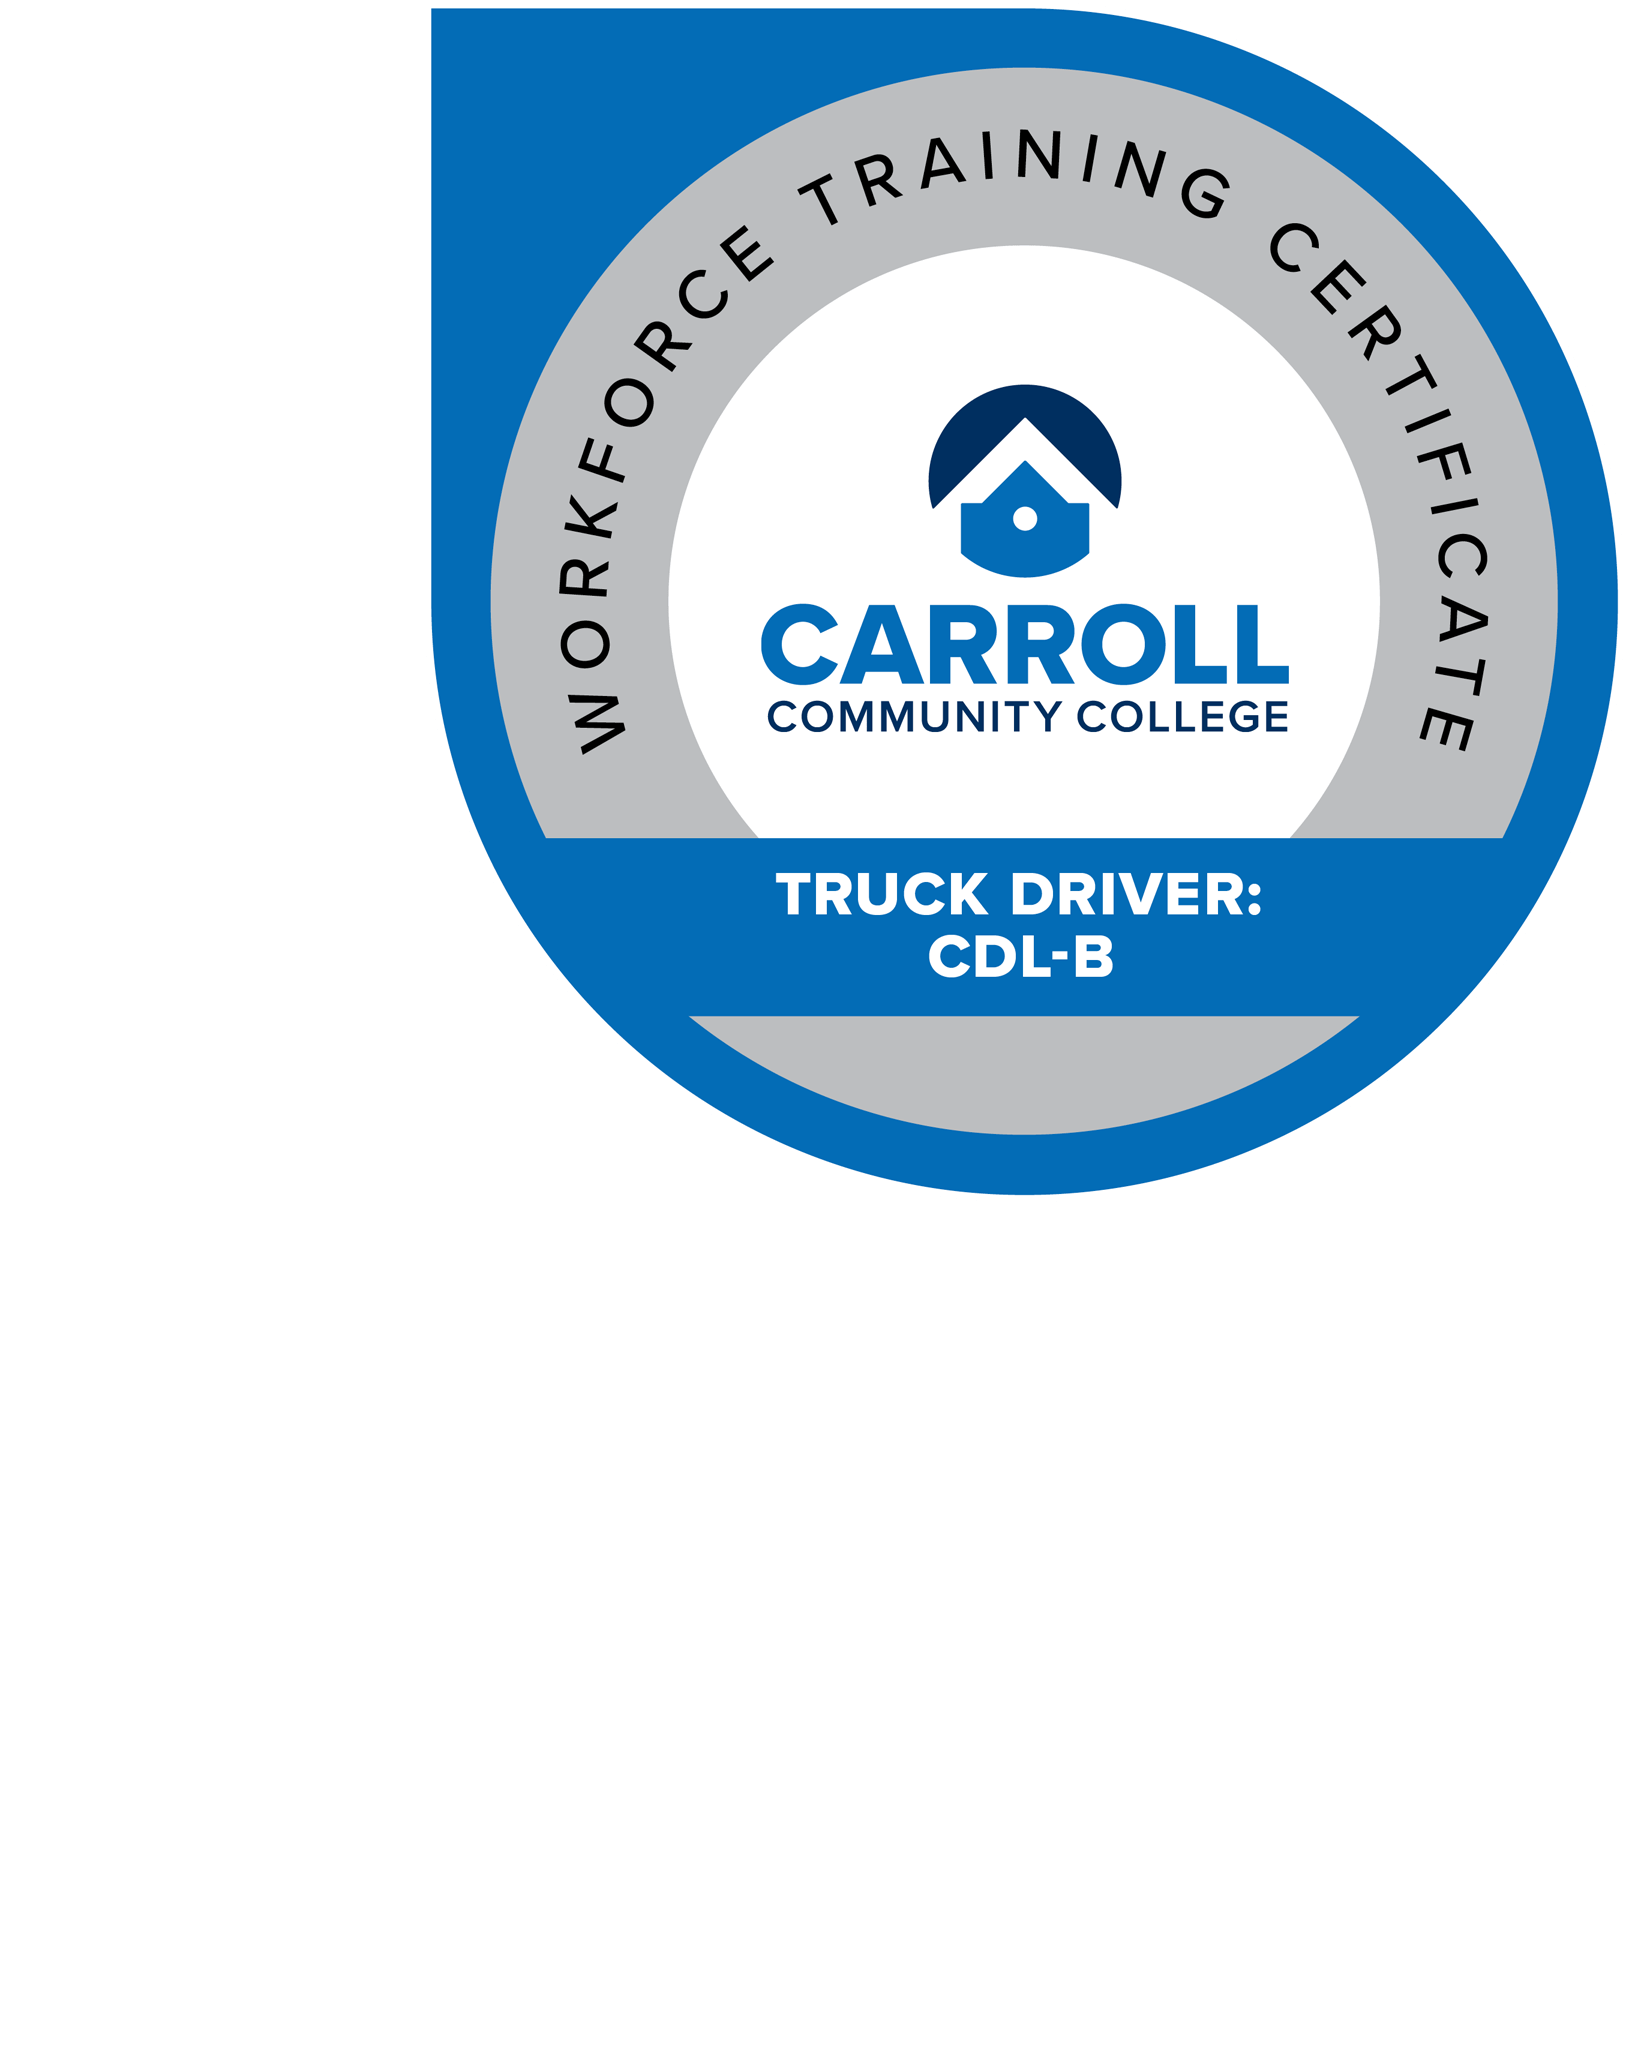 digital-badge-truck-driver-cdl-a-space-carroll-community-college